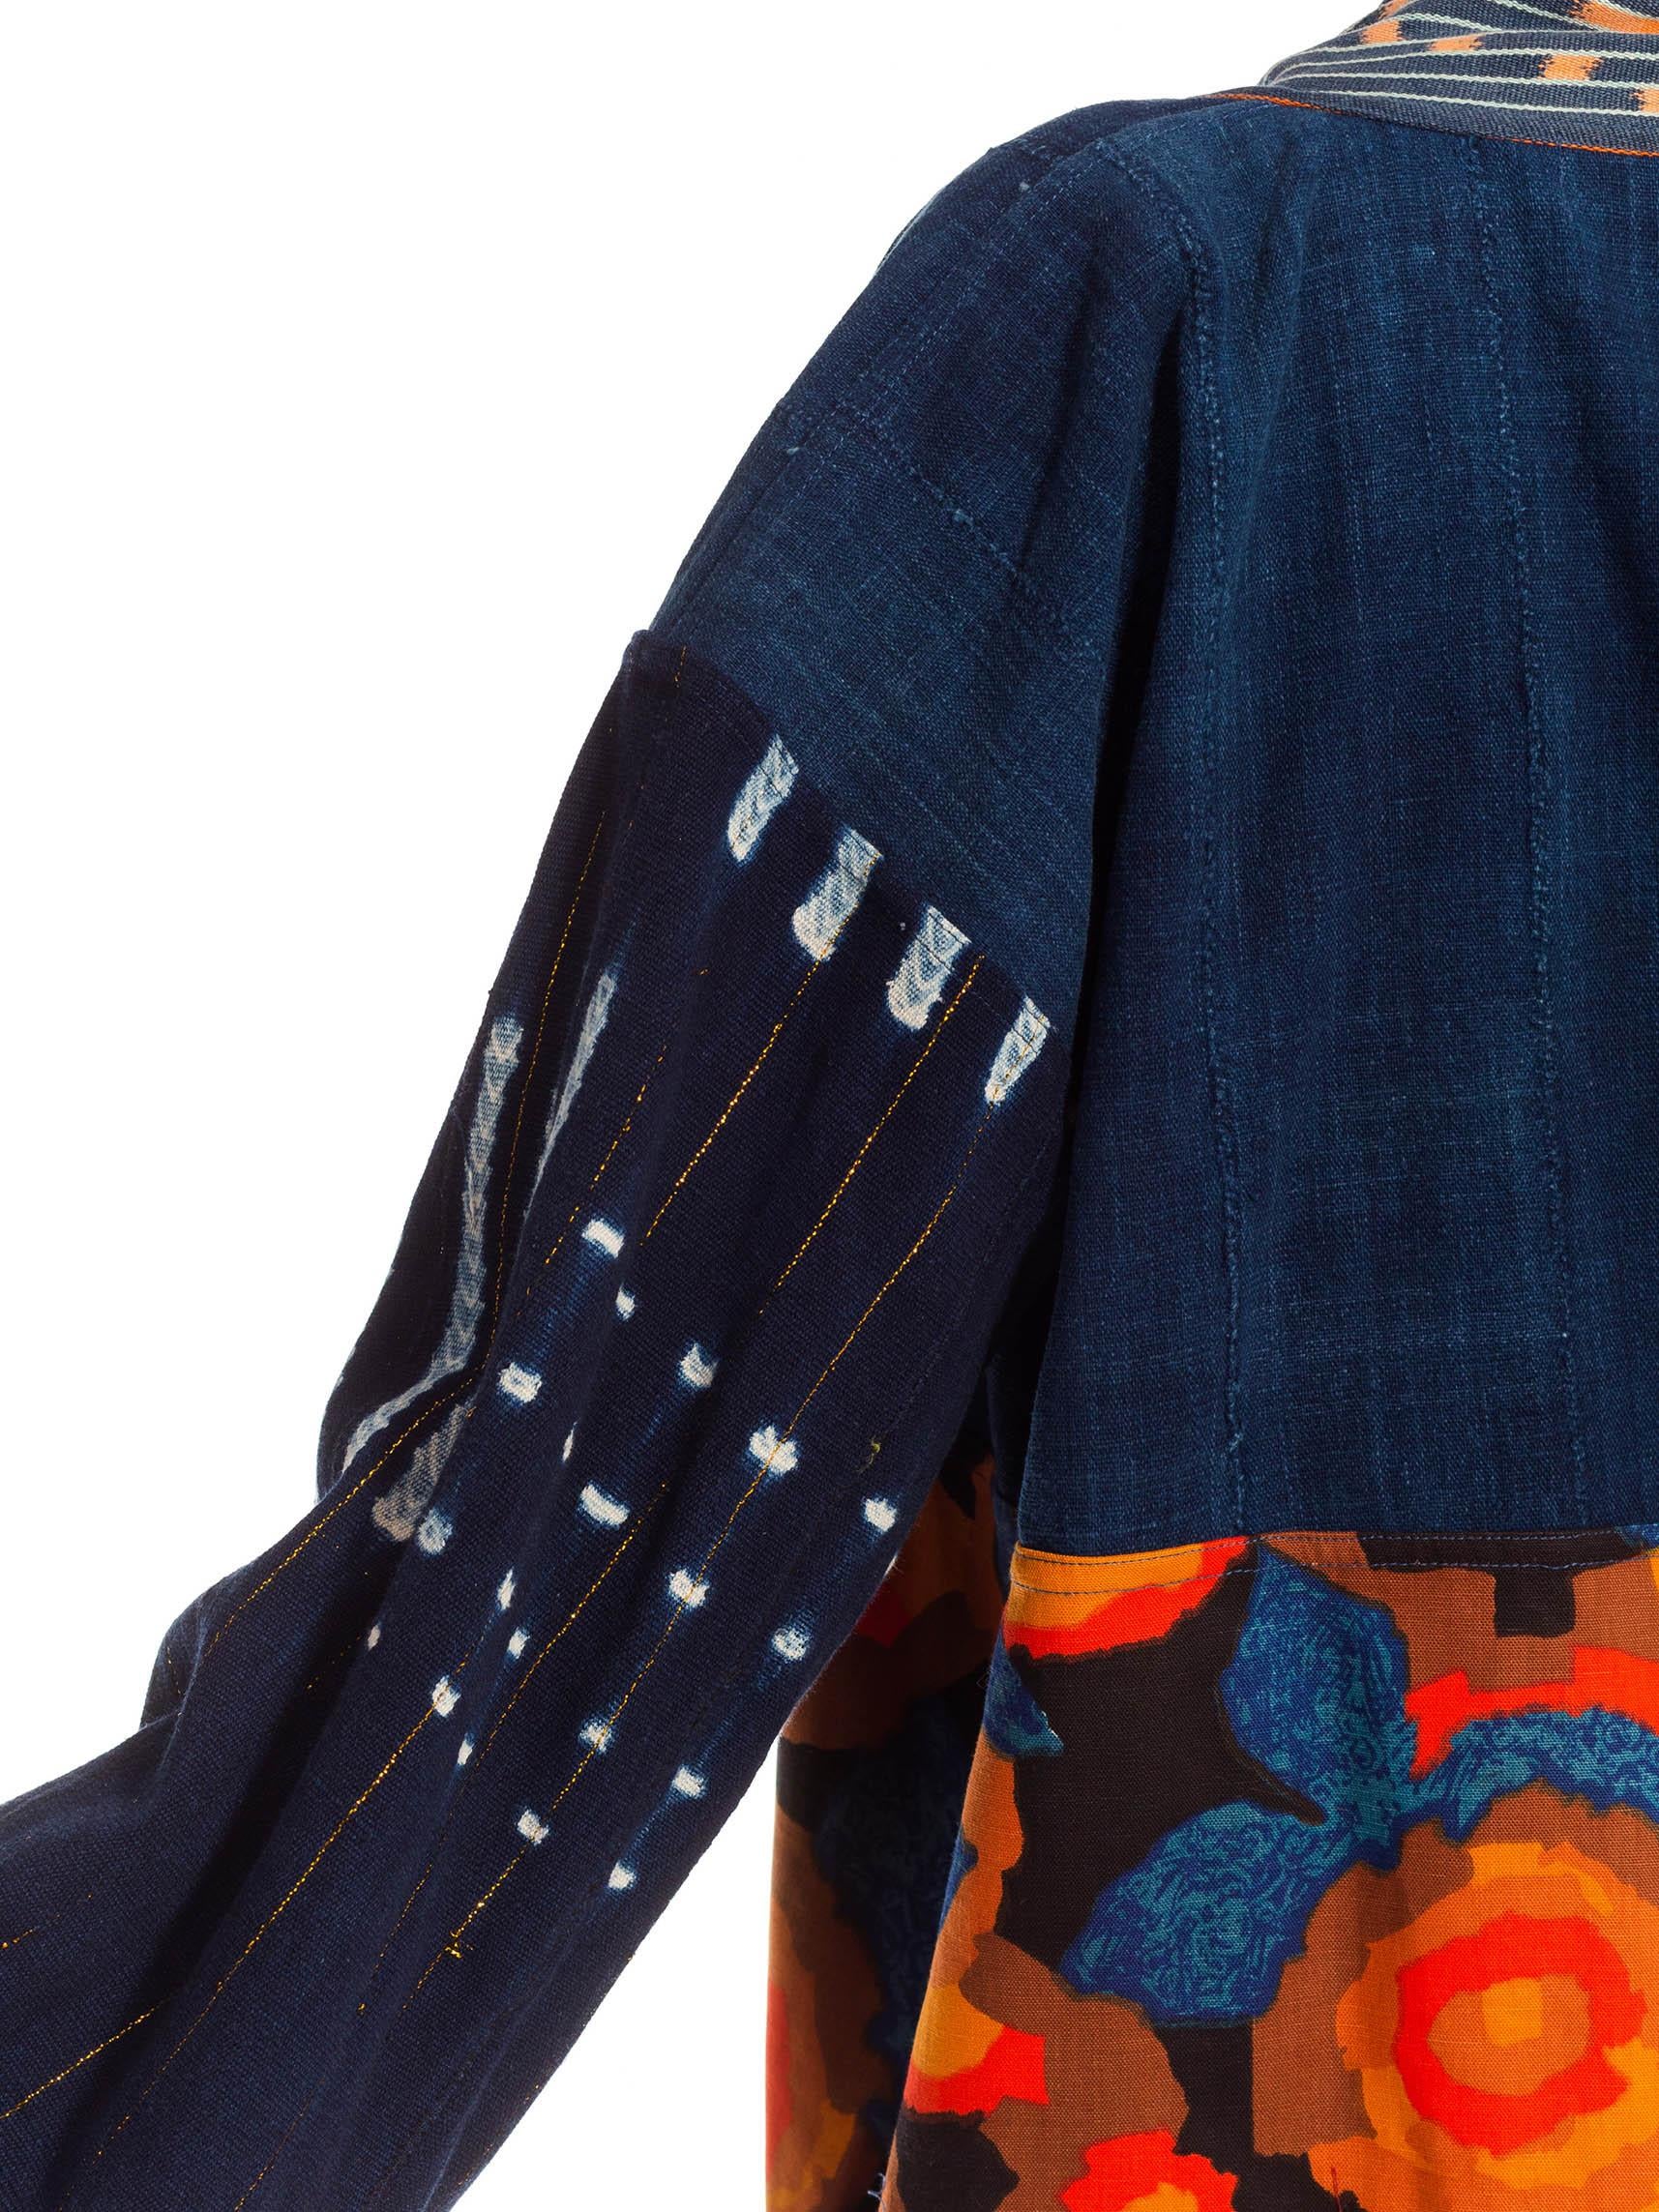 Morphew Collection - Tissu en coton bleu et orange vintage africain cyclisé, collection Indig en vente 3